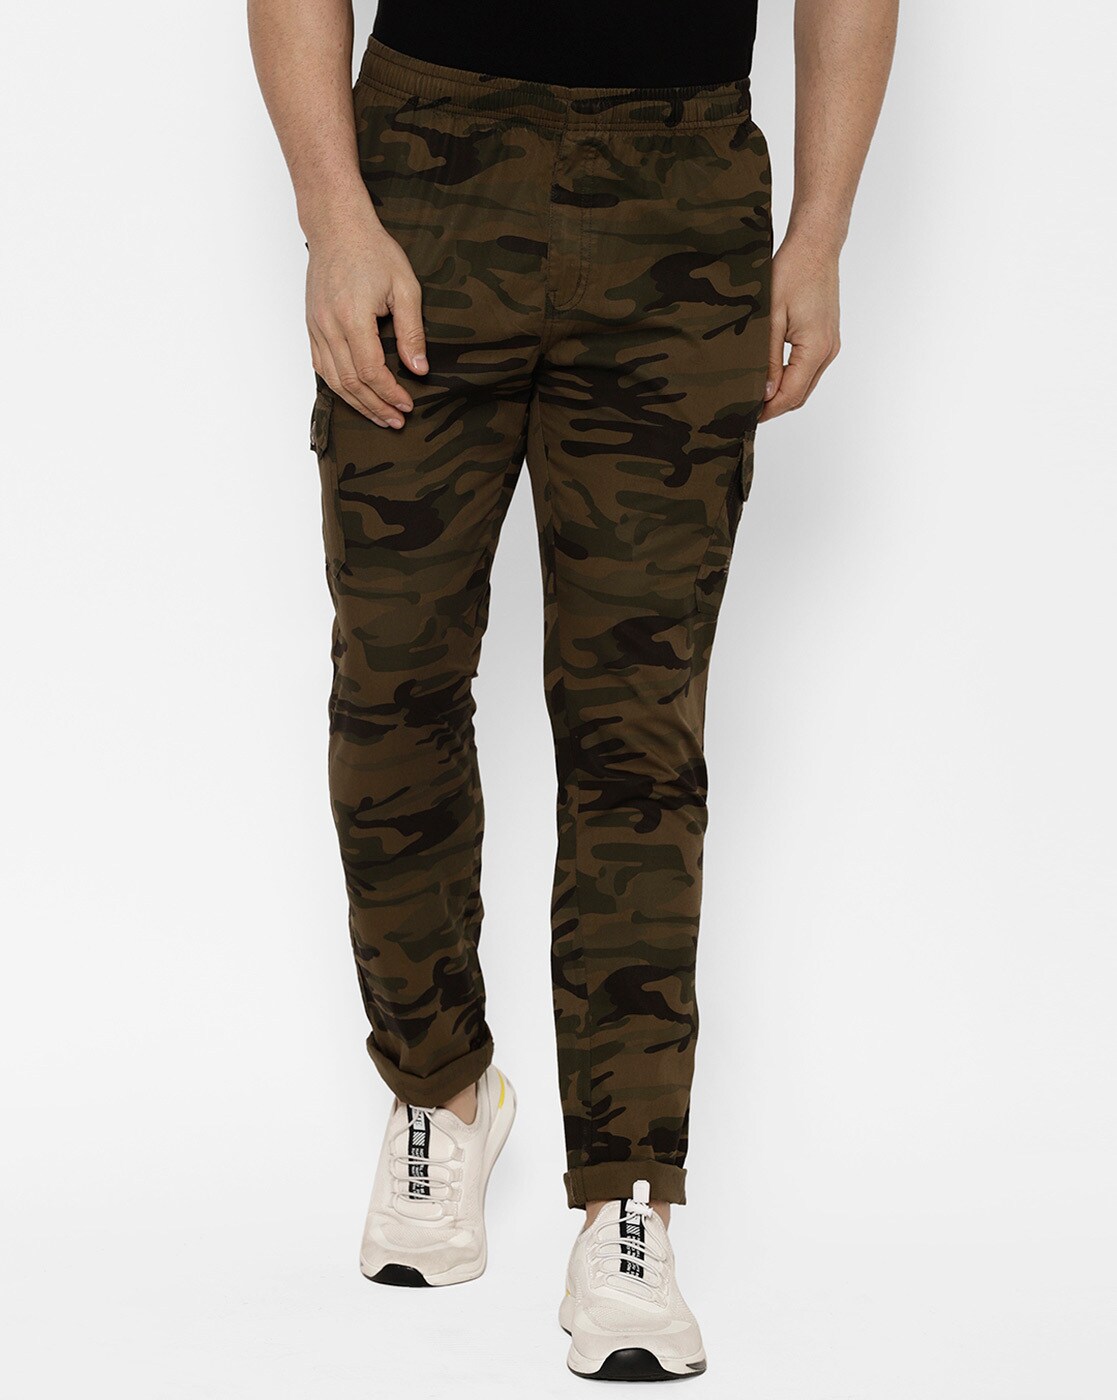 Men's Cargo Pant Camouflage Pants